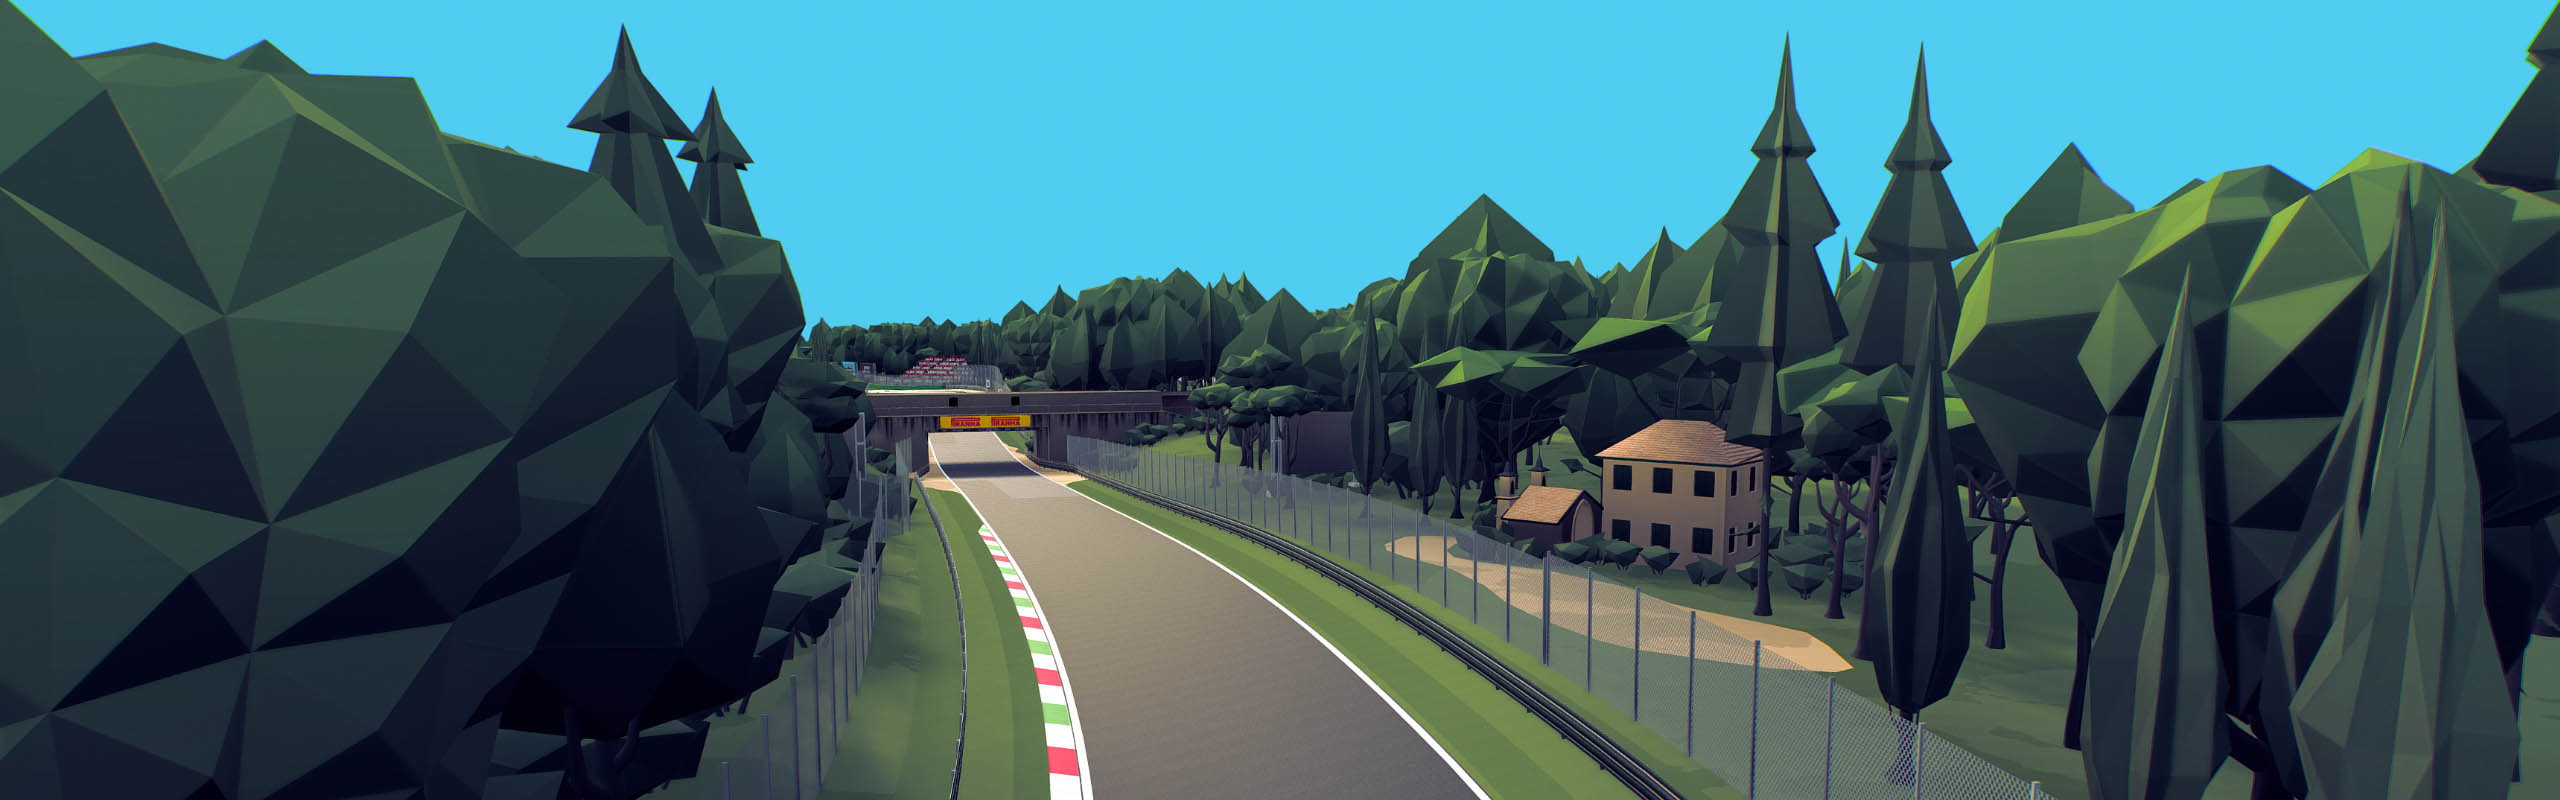 Cartoon Race Track Monza